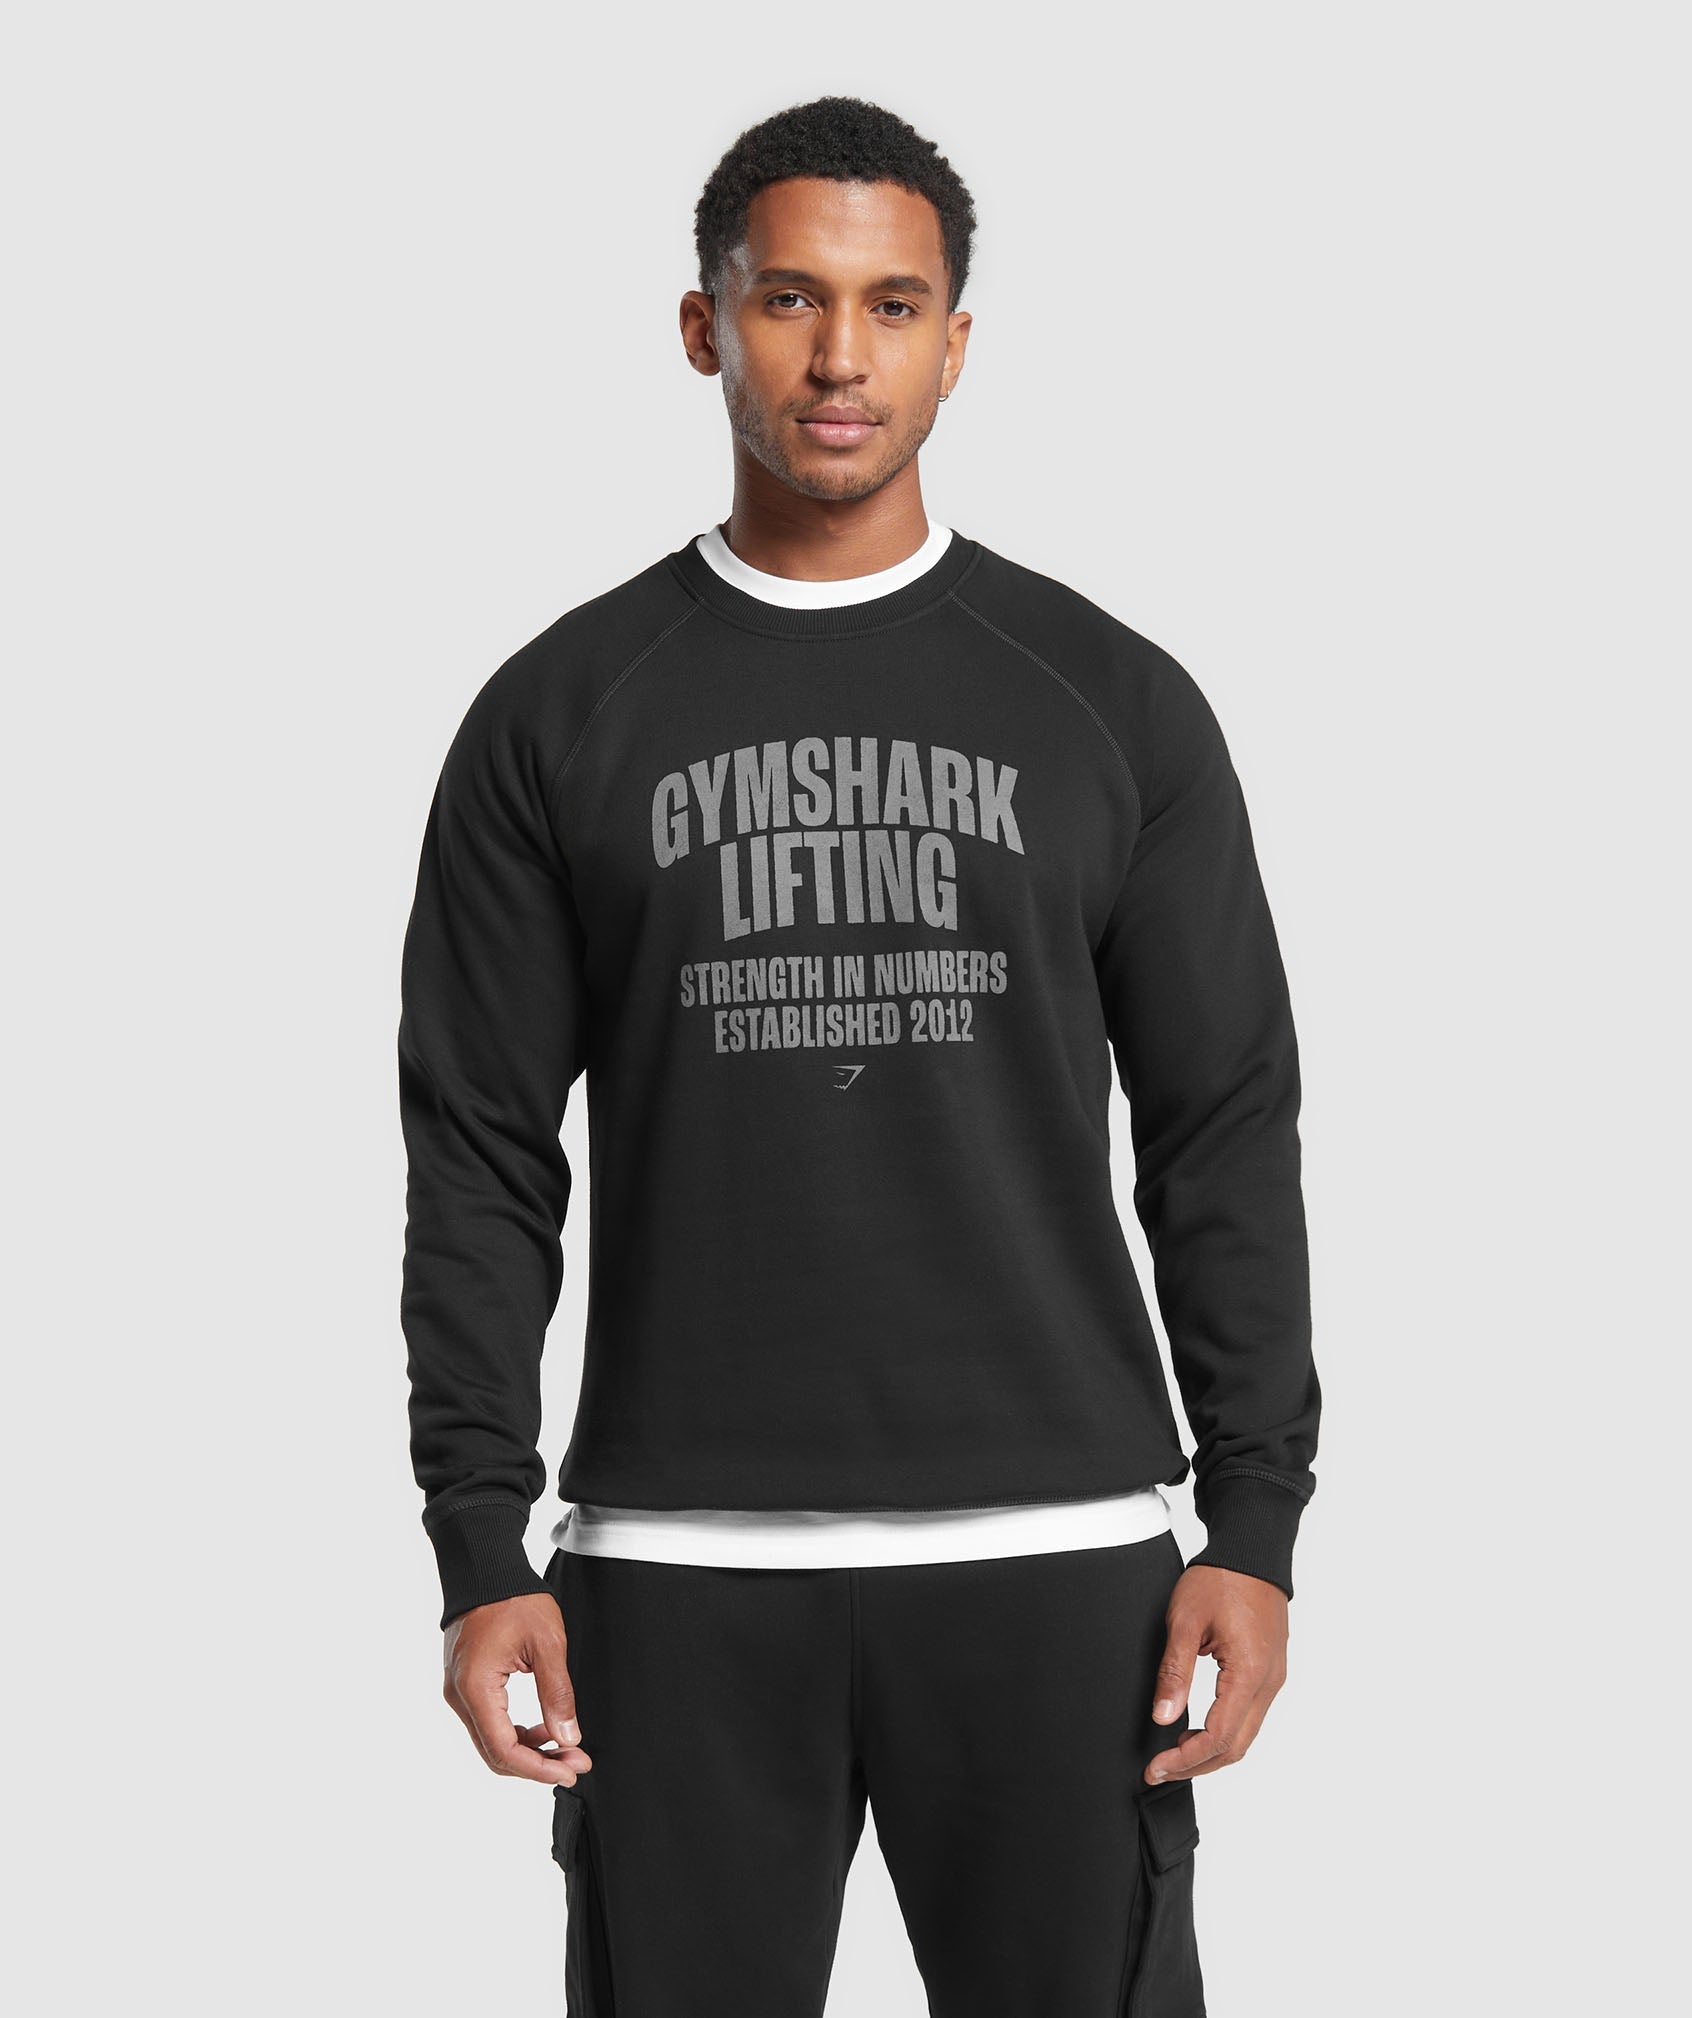 Gymshark Lifting Crew - Black